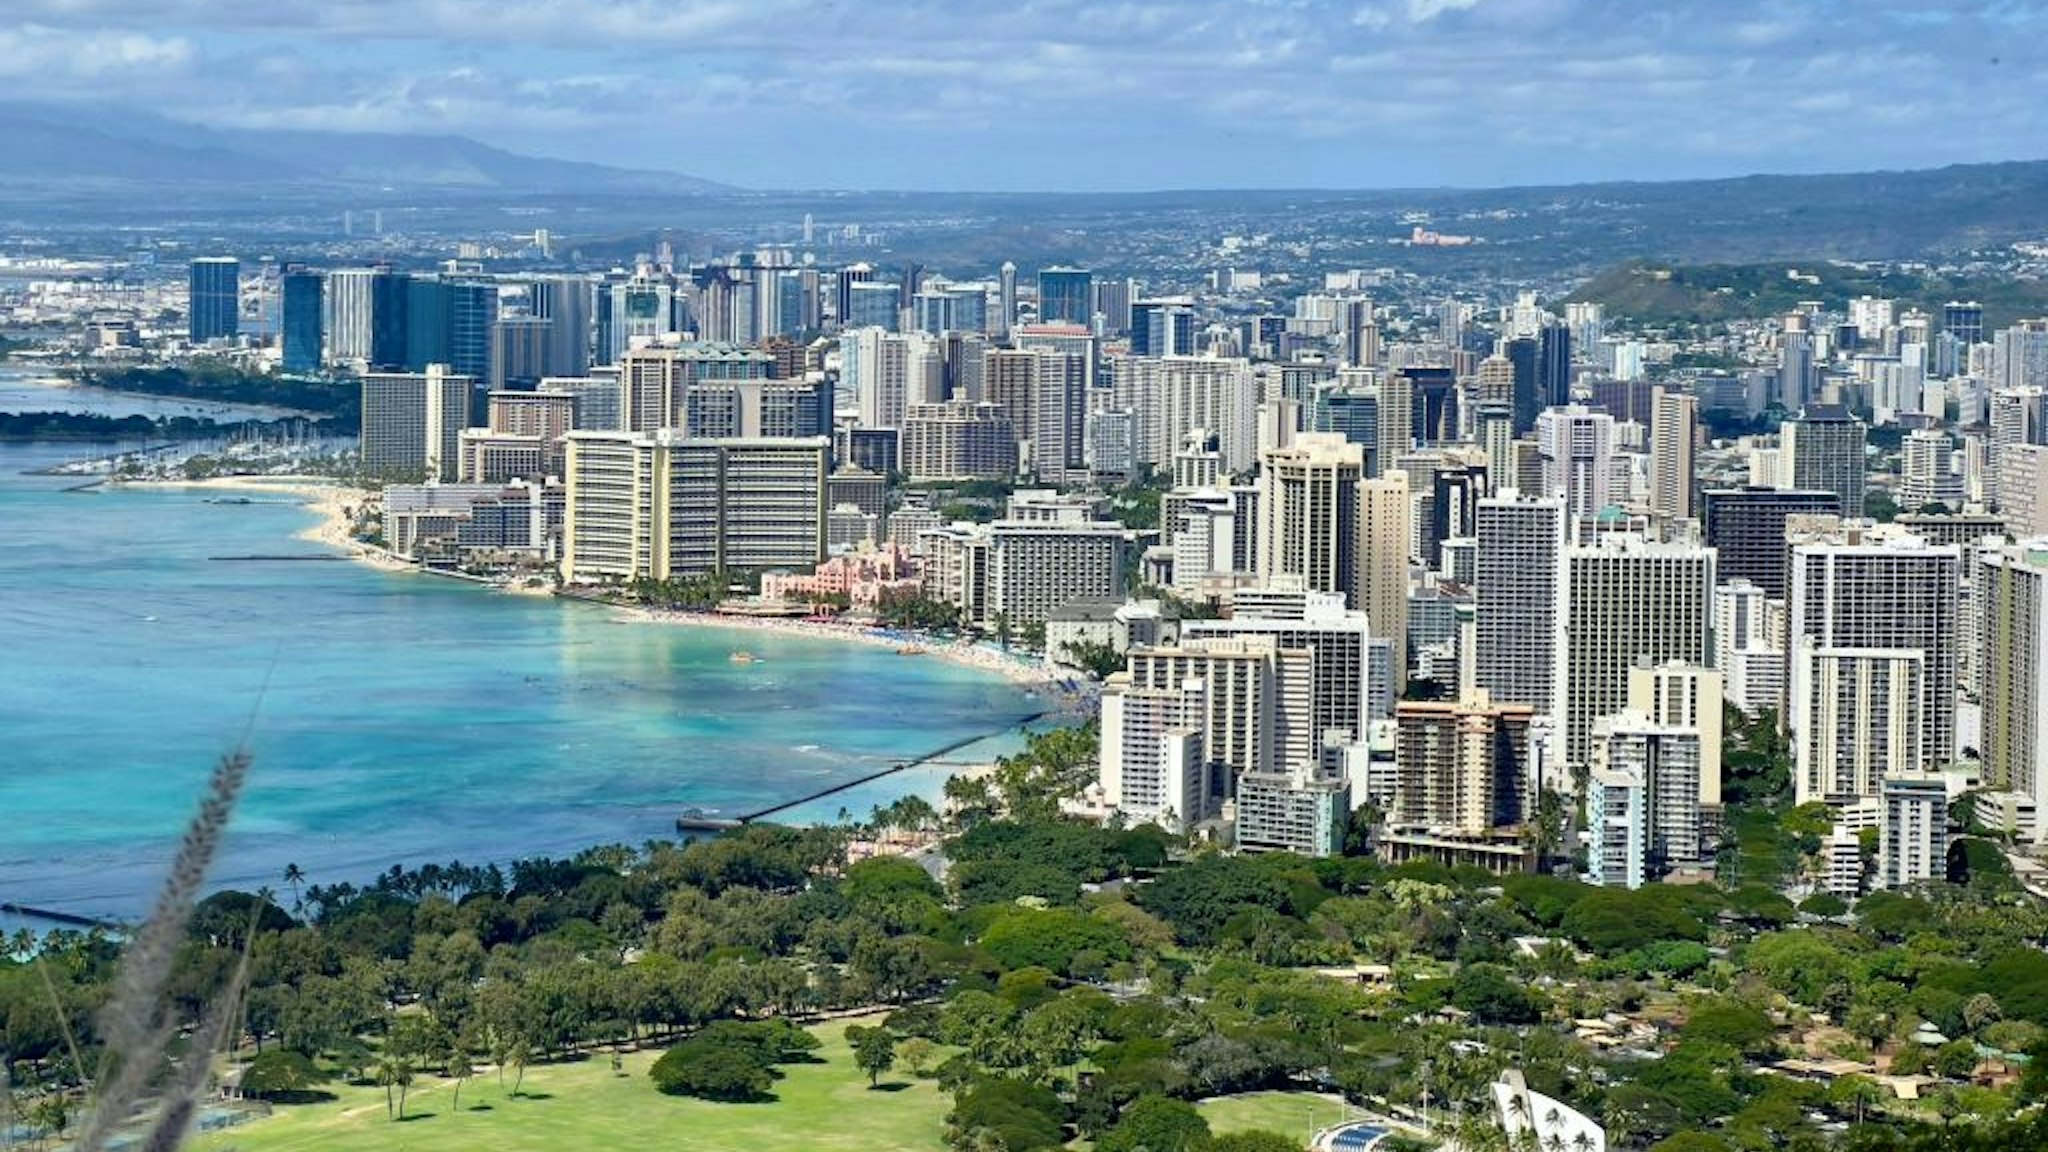 Panoramic view of Waikiki Beach and Honolulu, Hawaii as seen from the Summit of Diamond Head Crater on February 20, 2022.